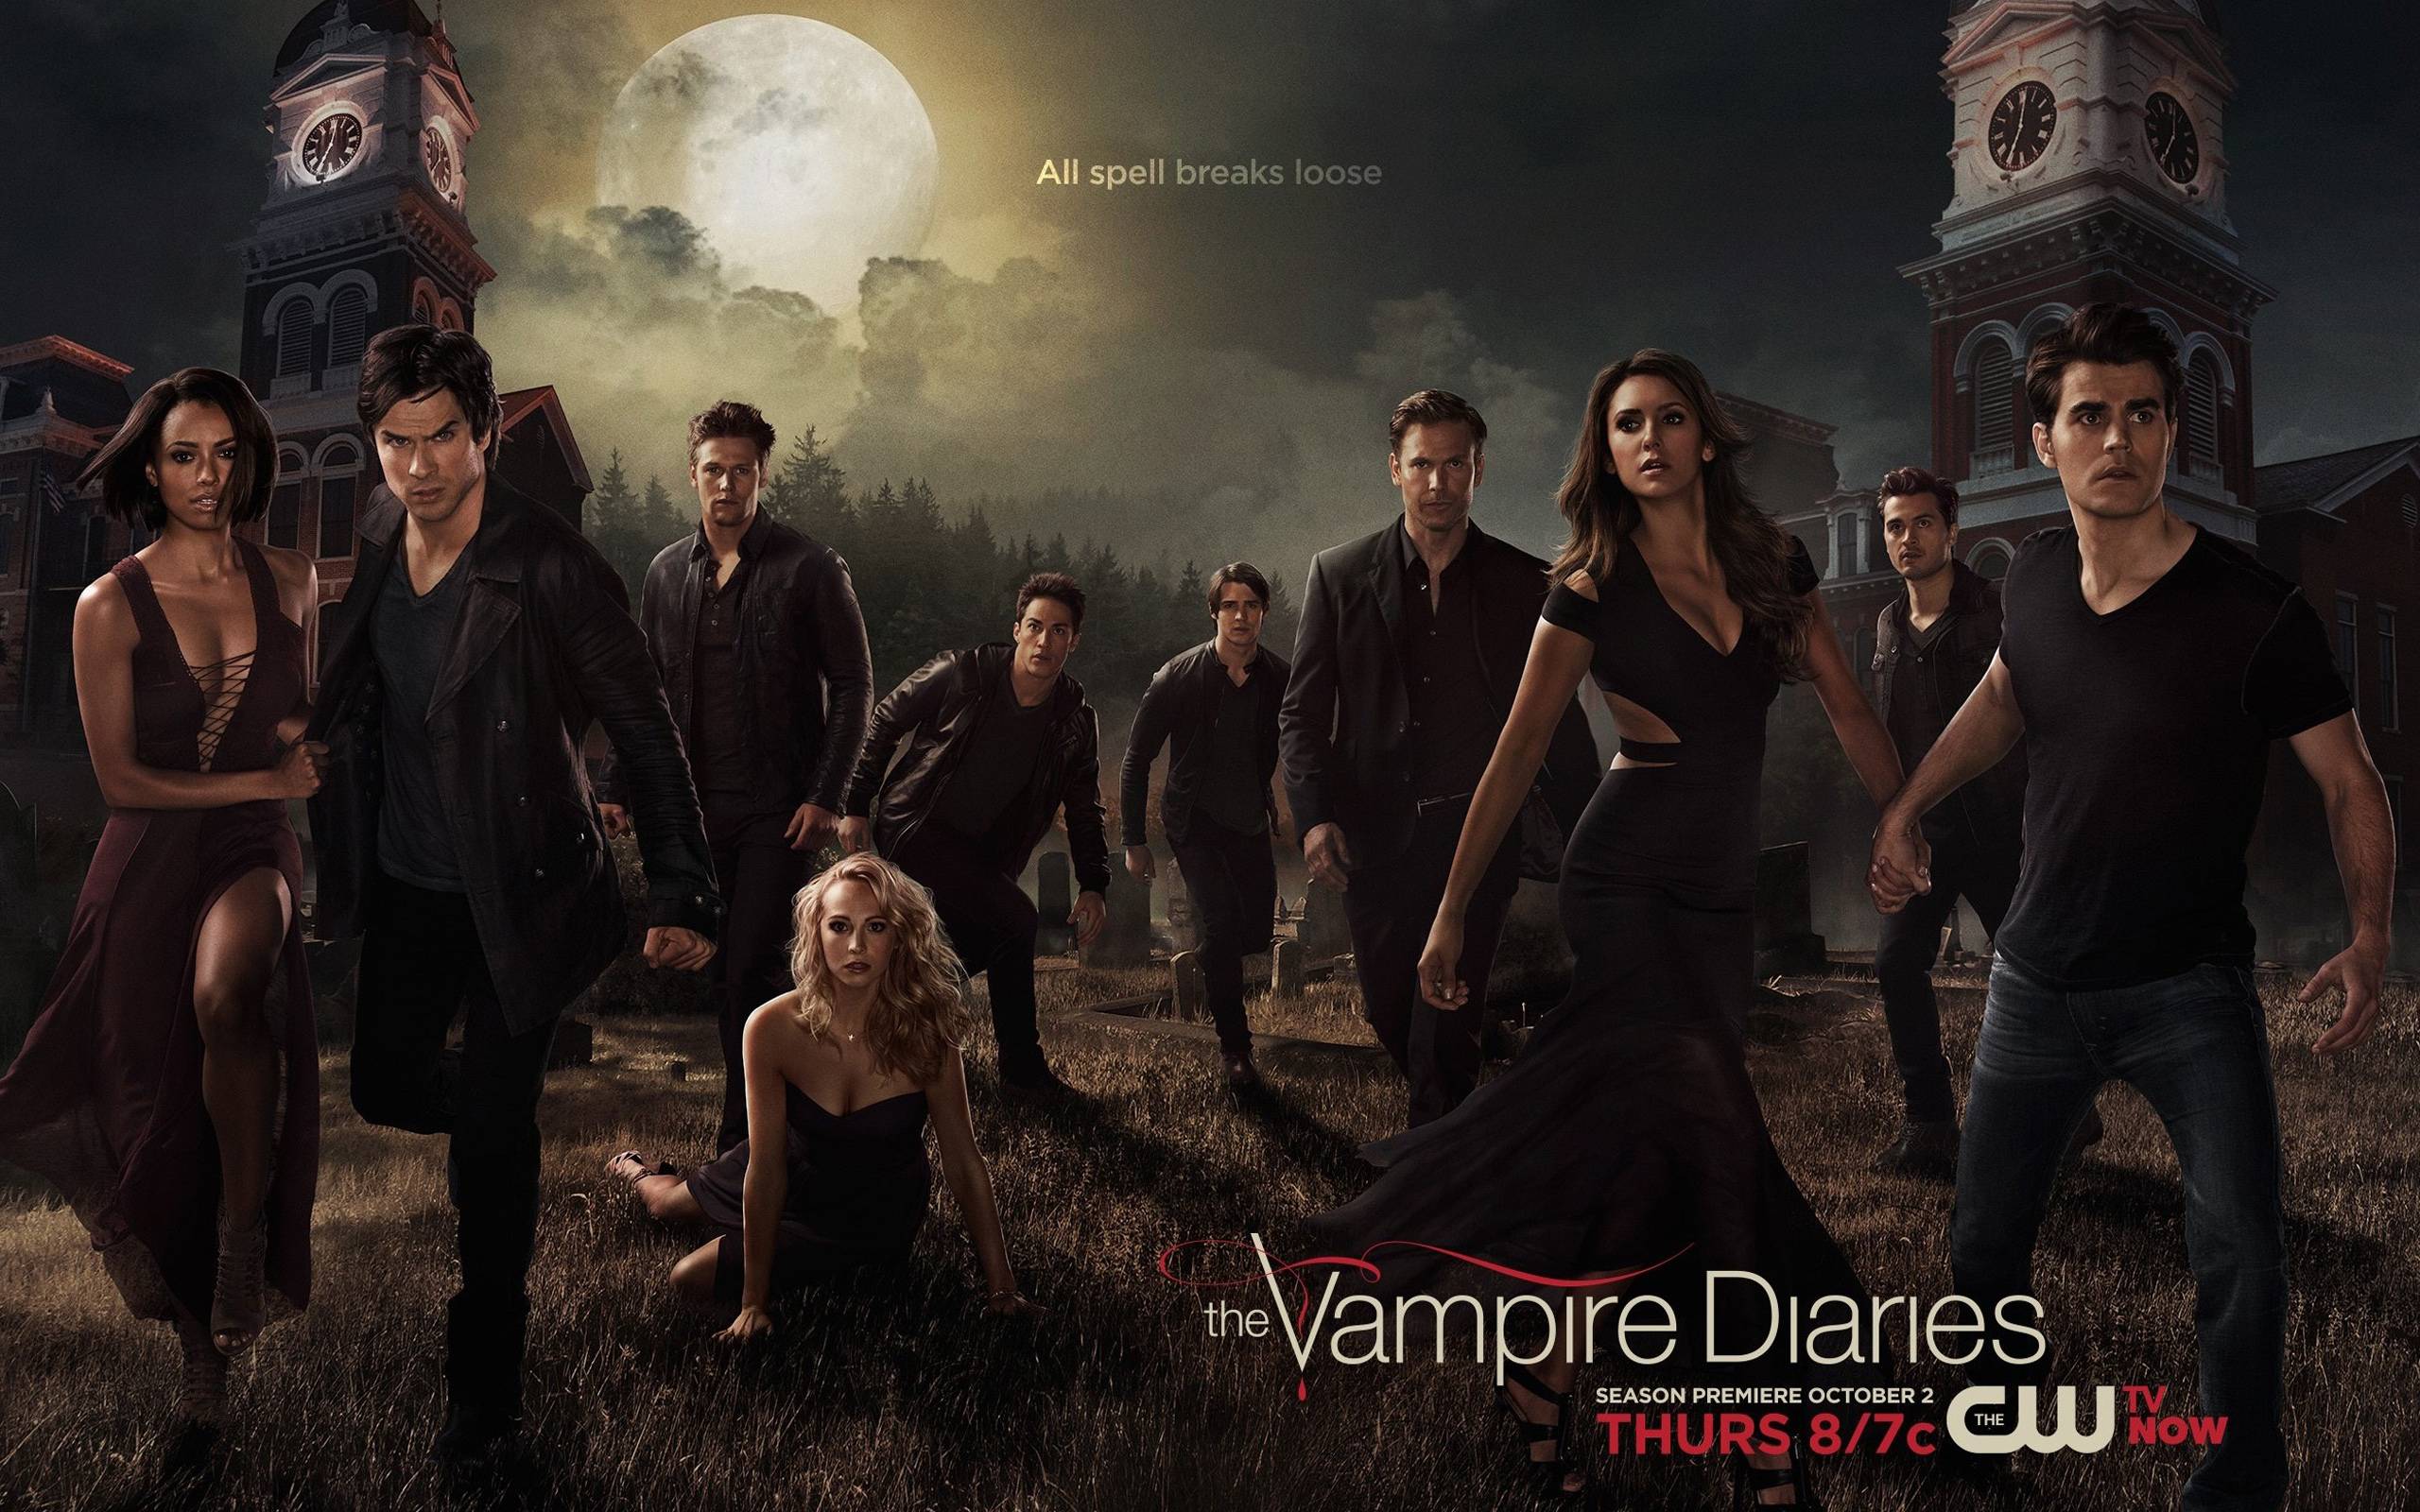 The Vampire Diaries Wallpaper Free The Vampire Diaries Background